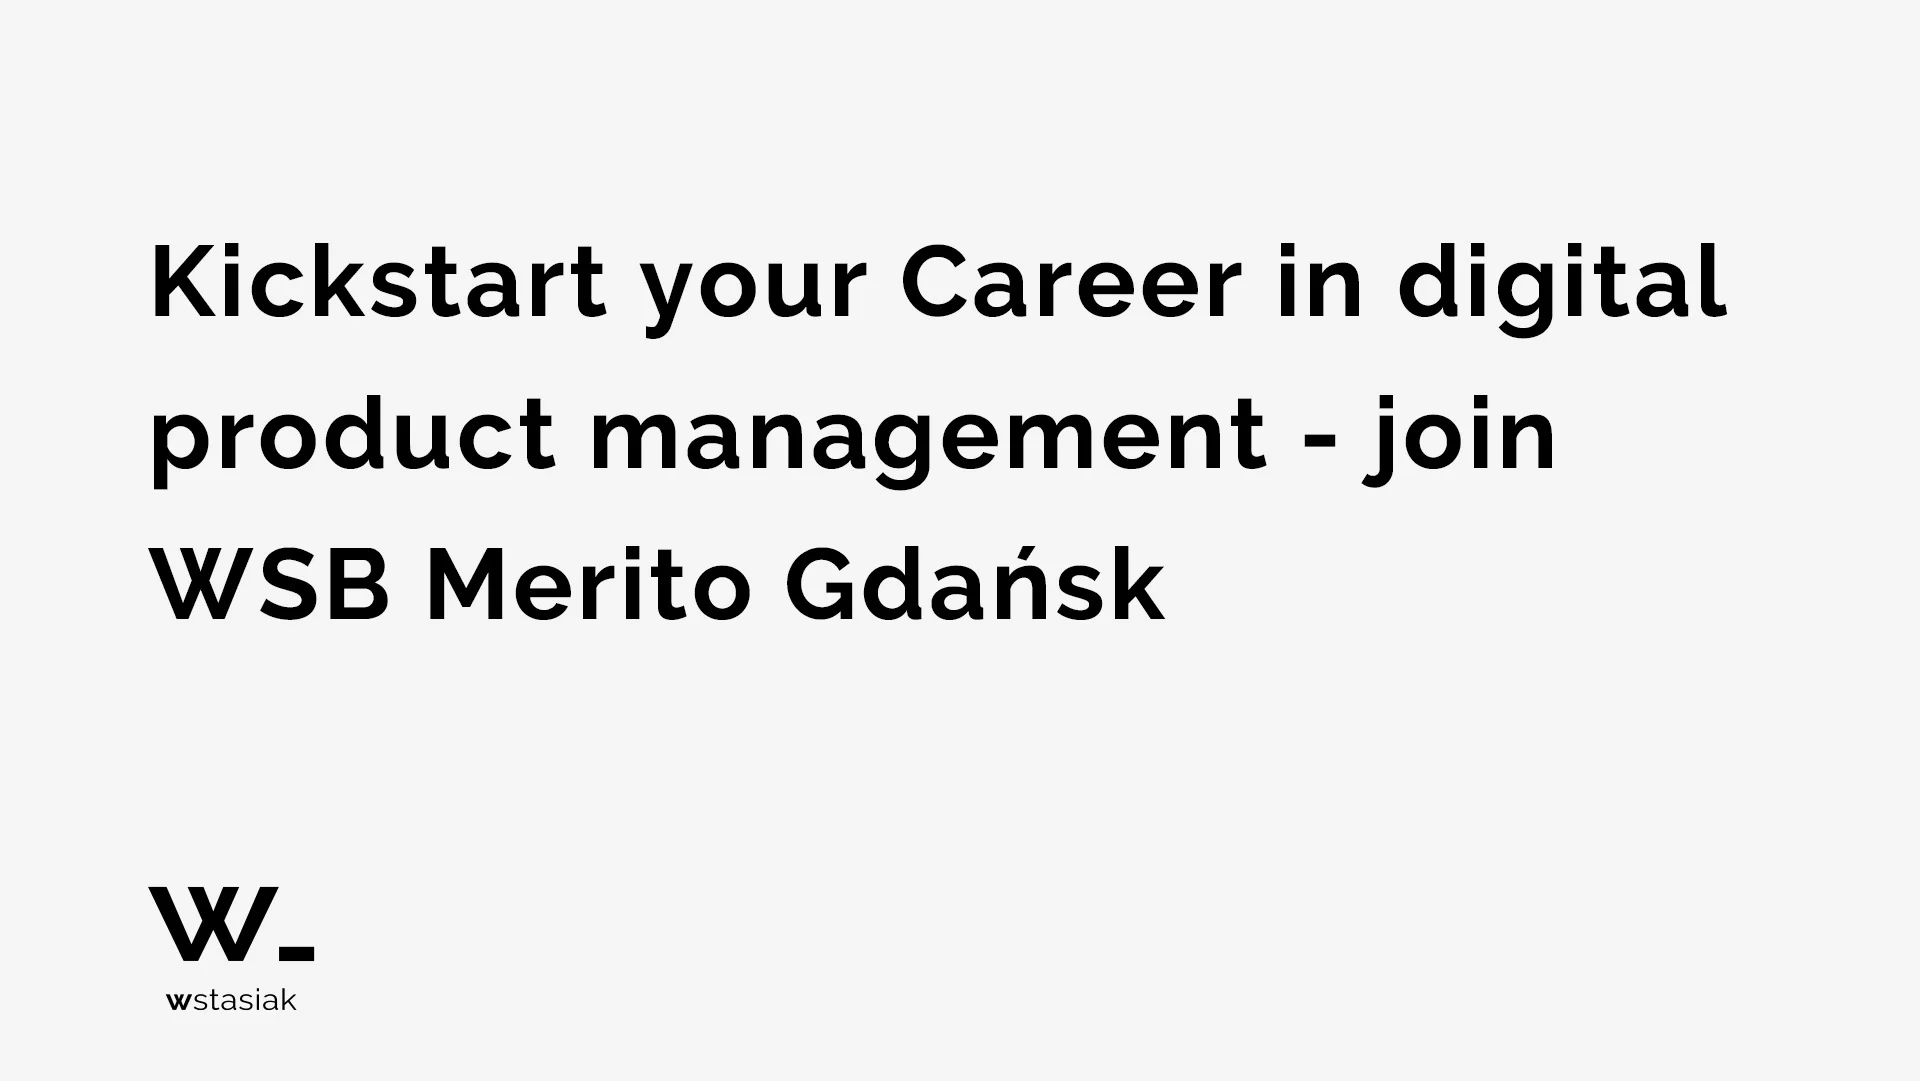 Kickstart your Career in digital product management - join WSB Merito Gdańsk postgraduate program